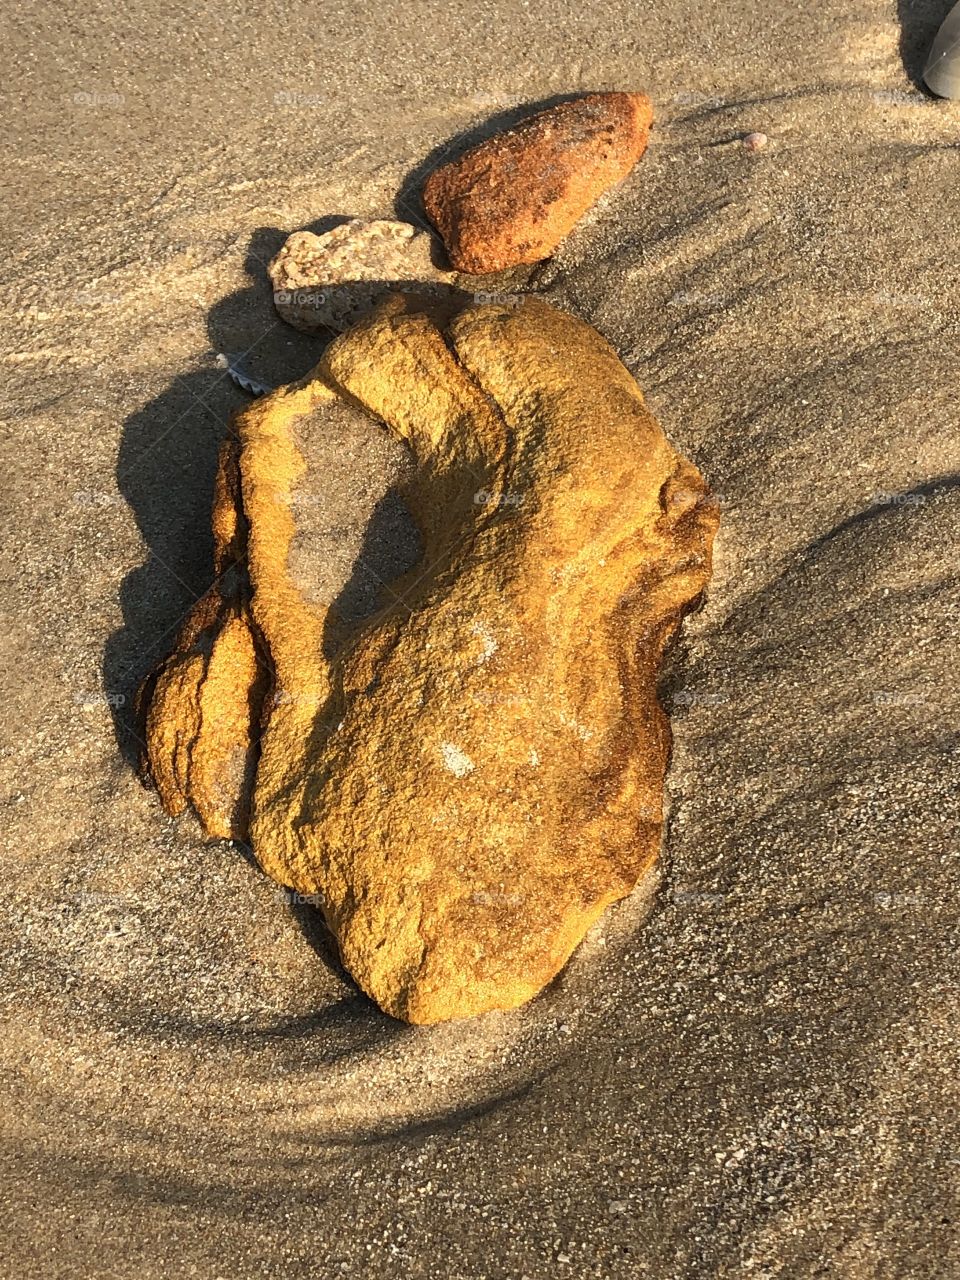 Sandstone rock